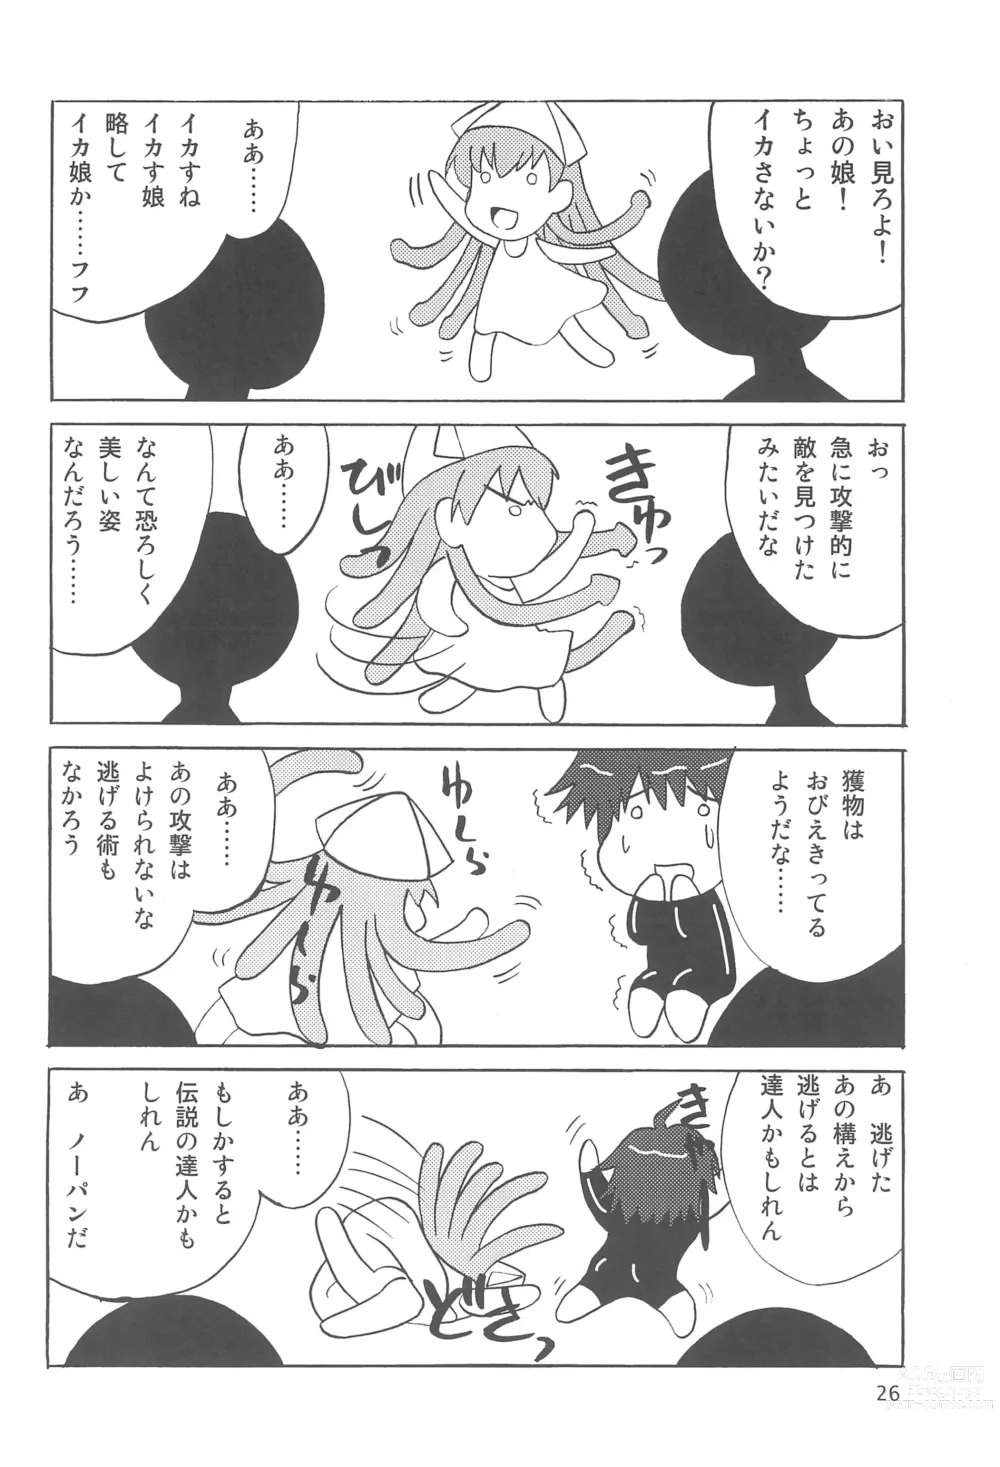 Page 26 of doujinshi Gegeso no Nyuubou